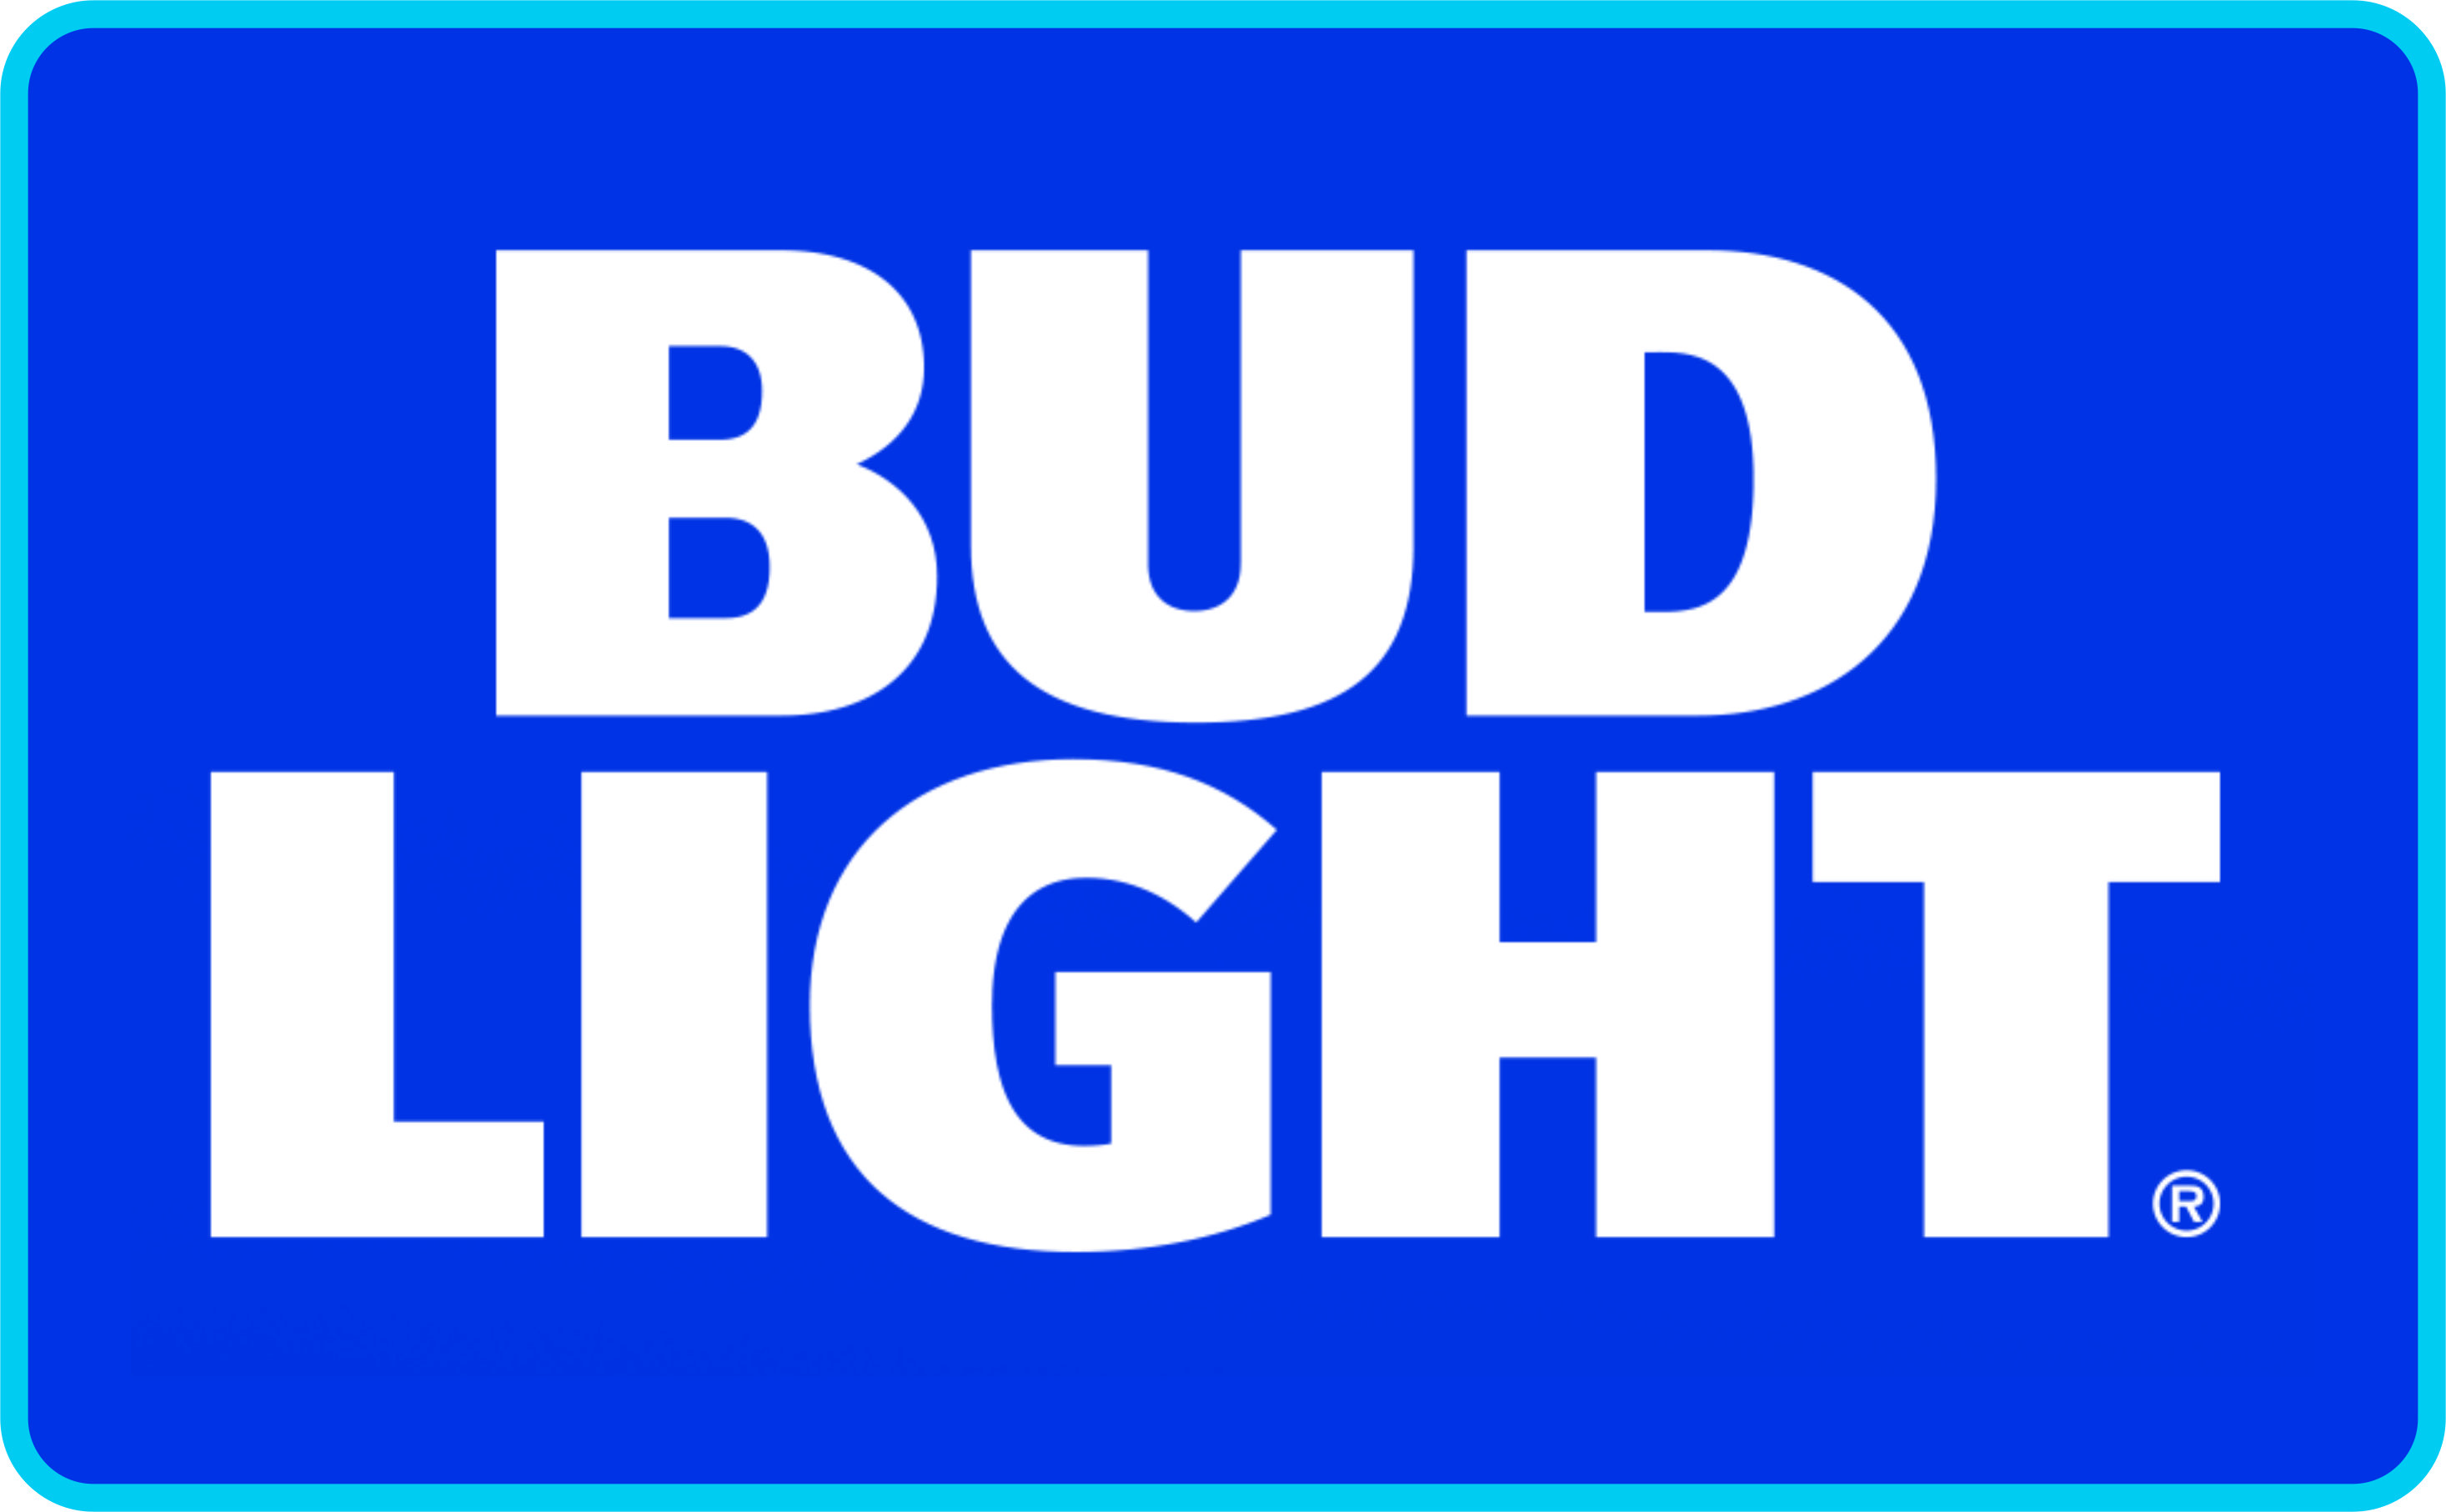 2934x1814 Get free high quality HD wallpapers bud light football logo